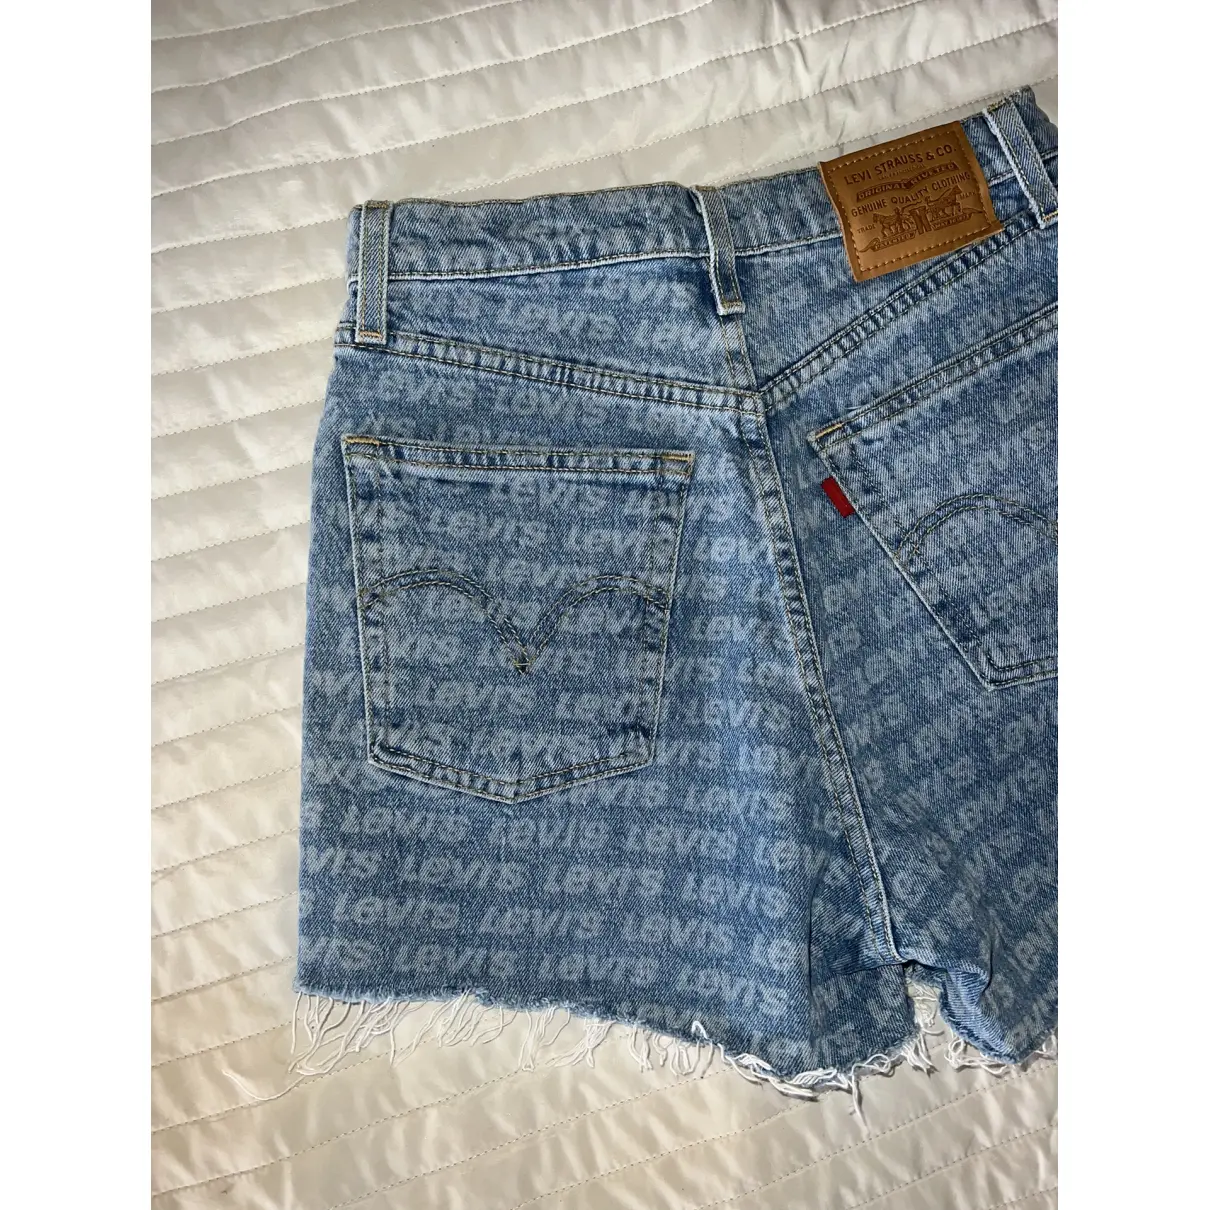 Buy Levi's Shorts online